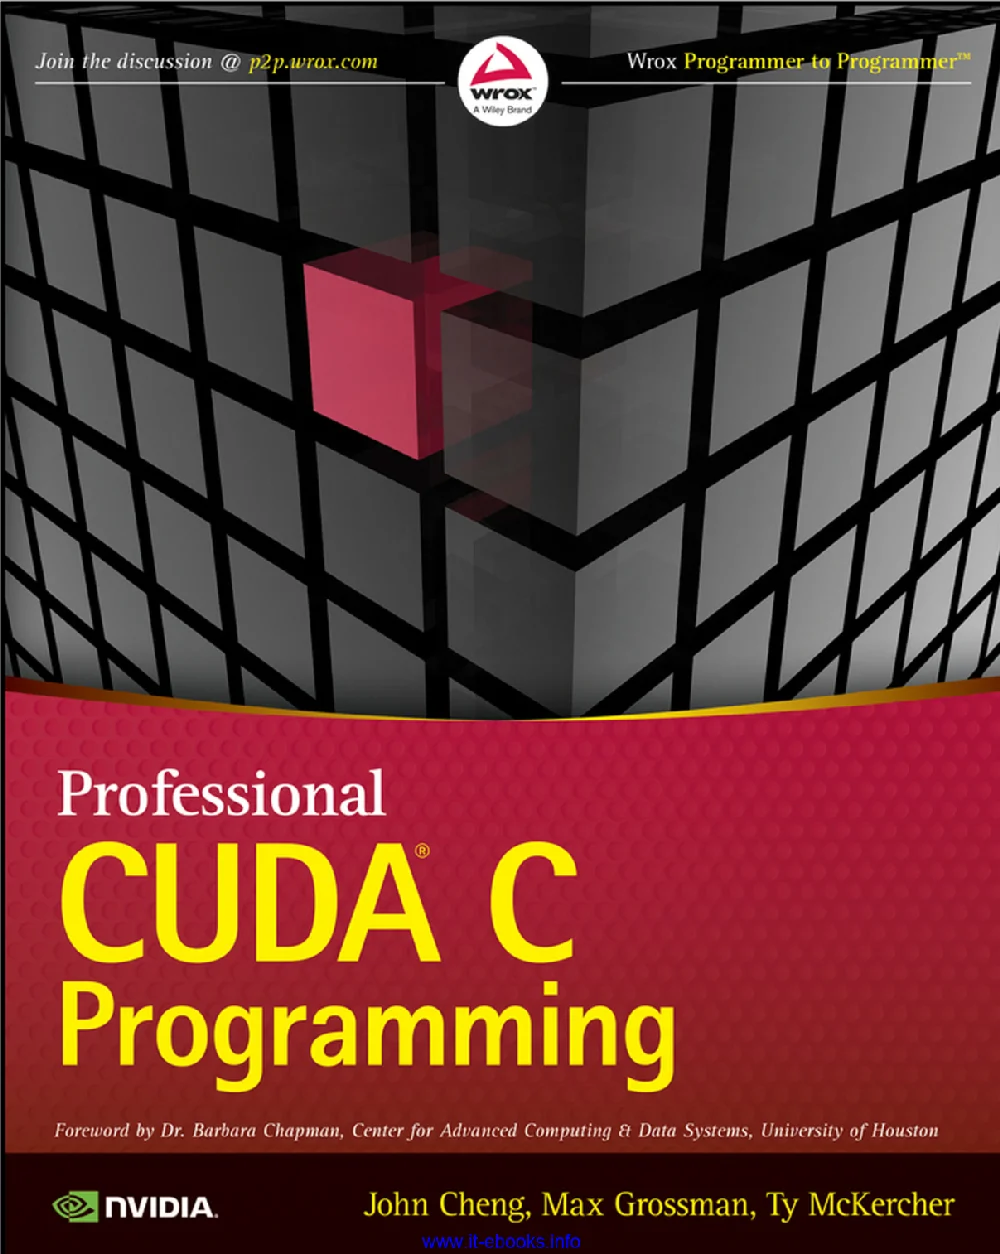 Professional CUDA C Programming